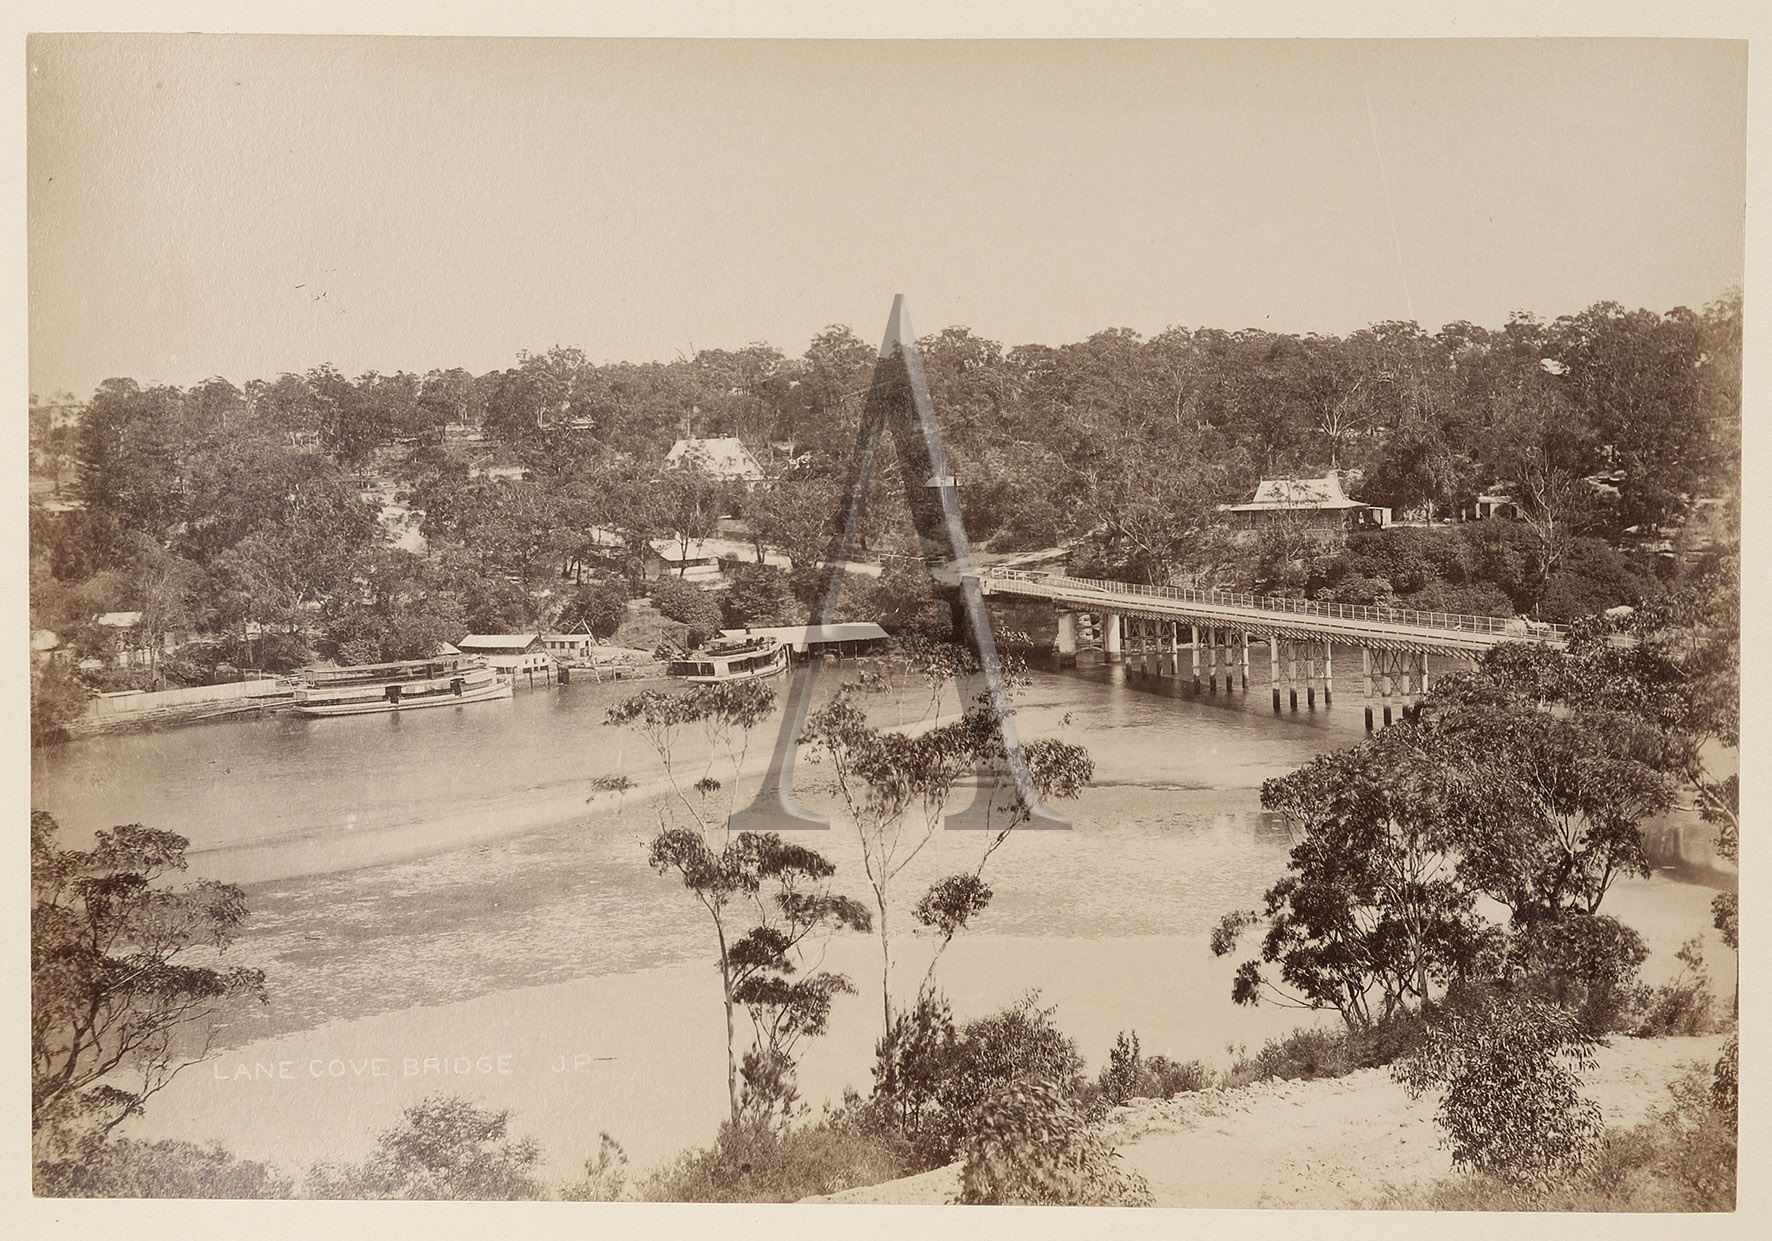 Lane Cove Bridge. - Antique Print from 1885